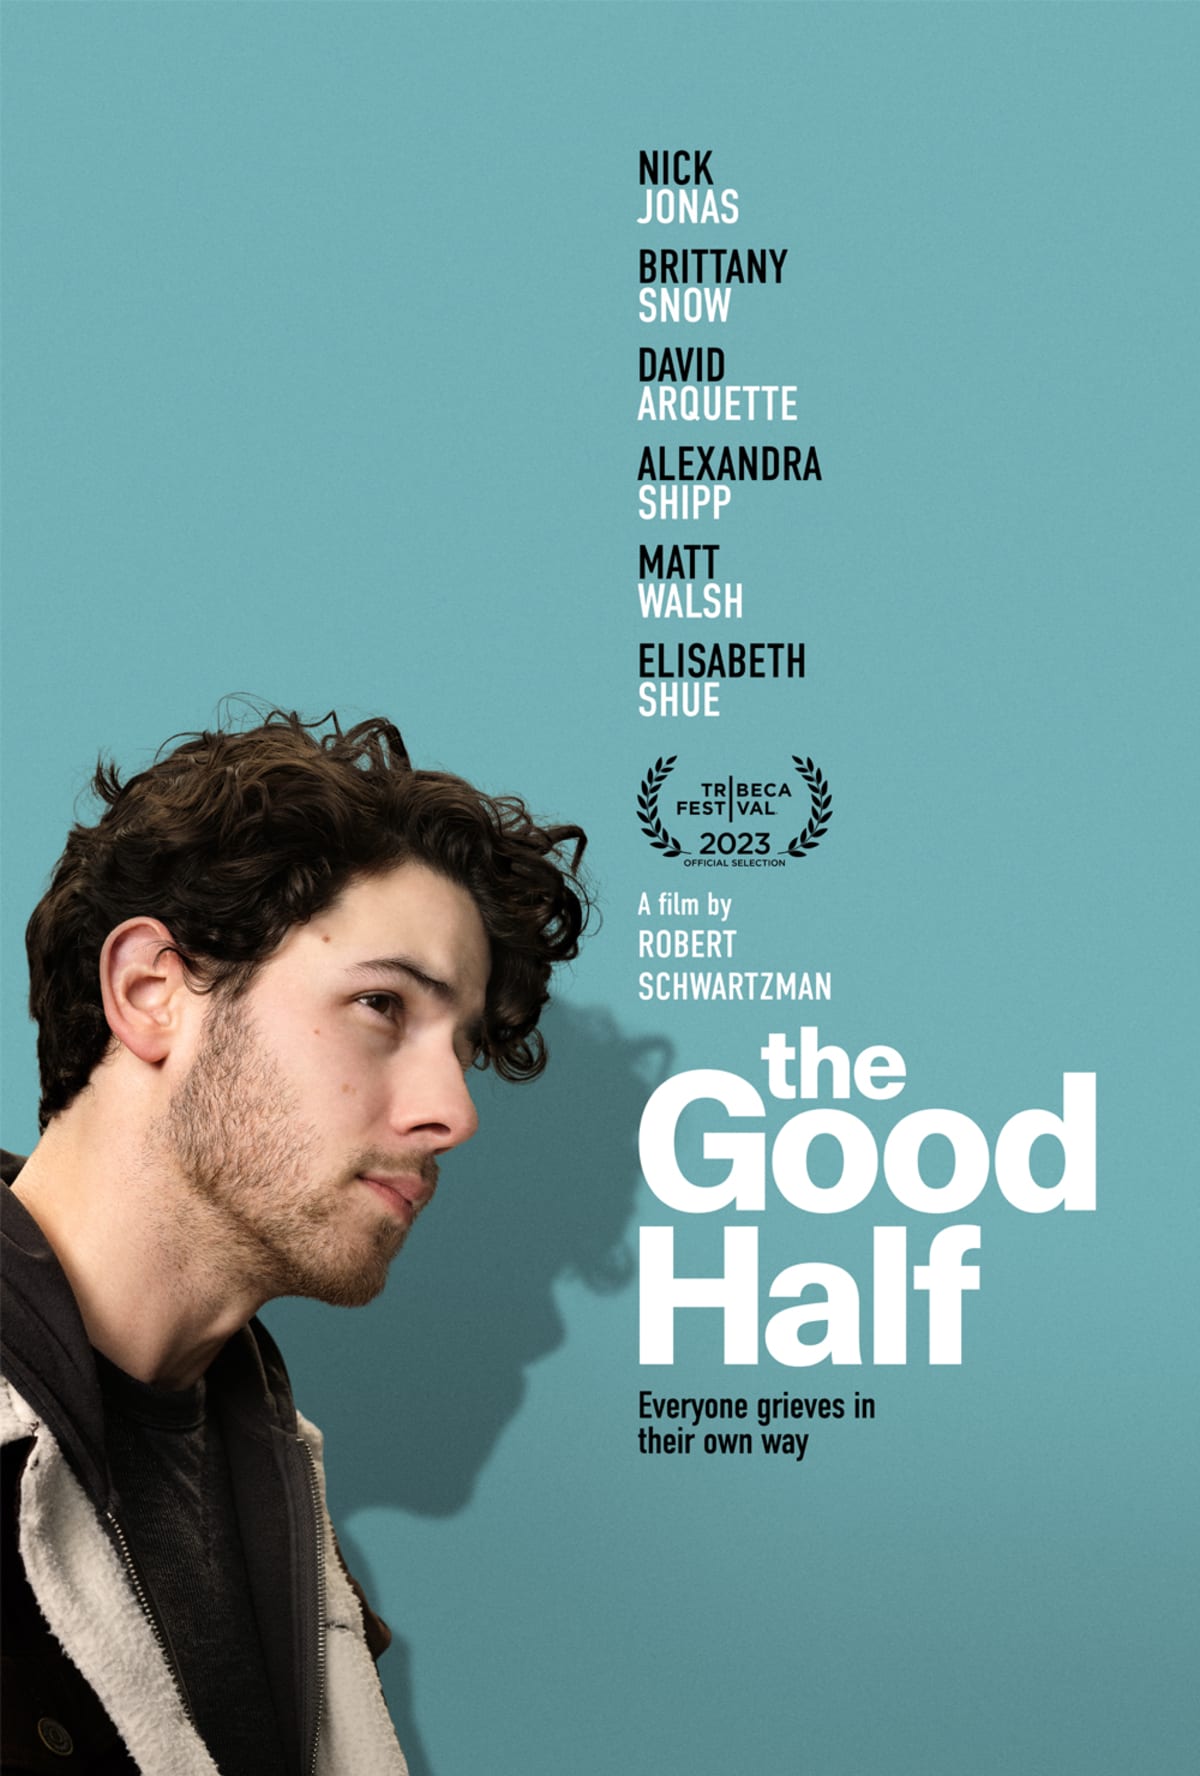 The Good Half: An Evening with Nick Jonas and Robert Schwartzman